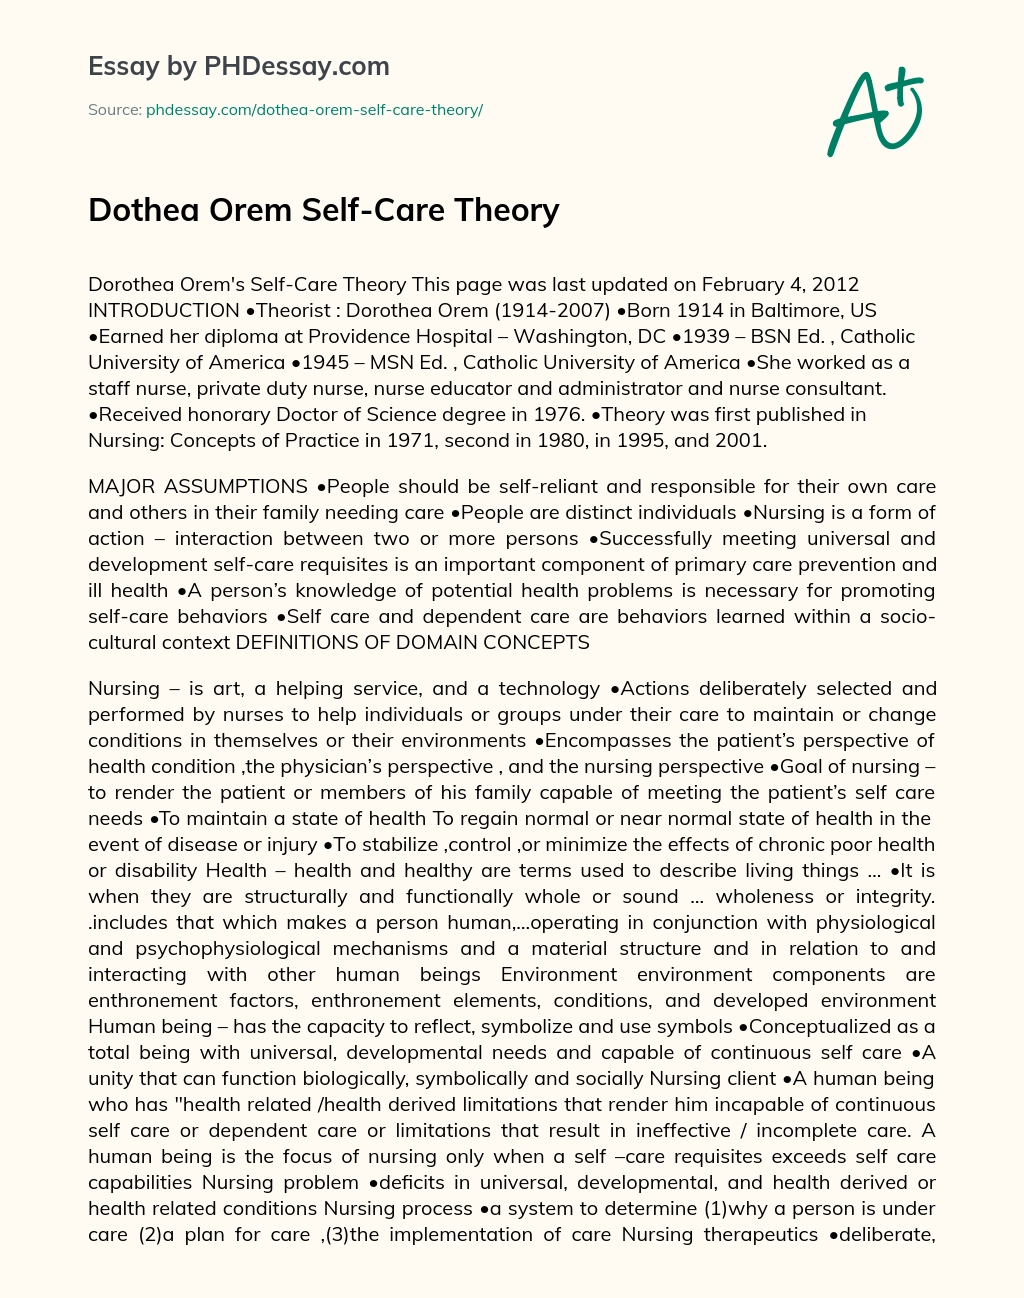 Dothea Orem Self-Care Theory essay